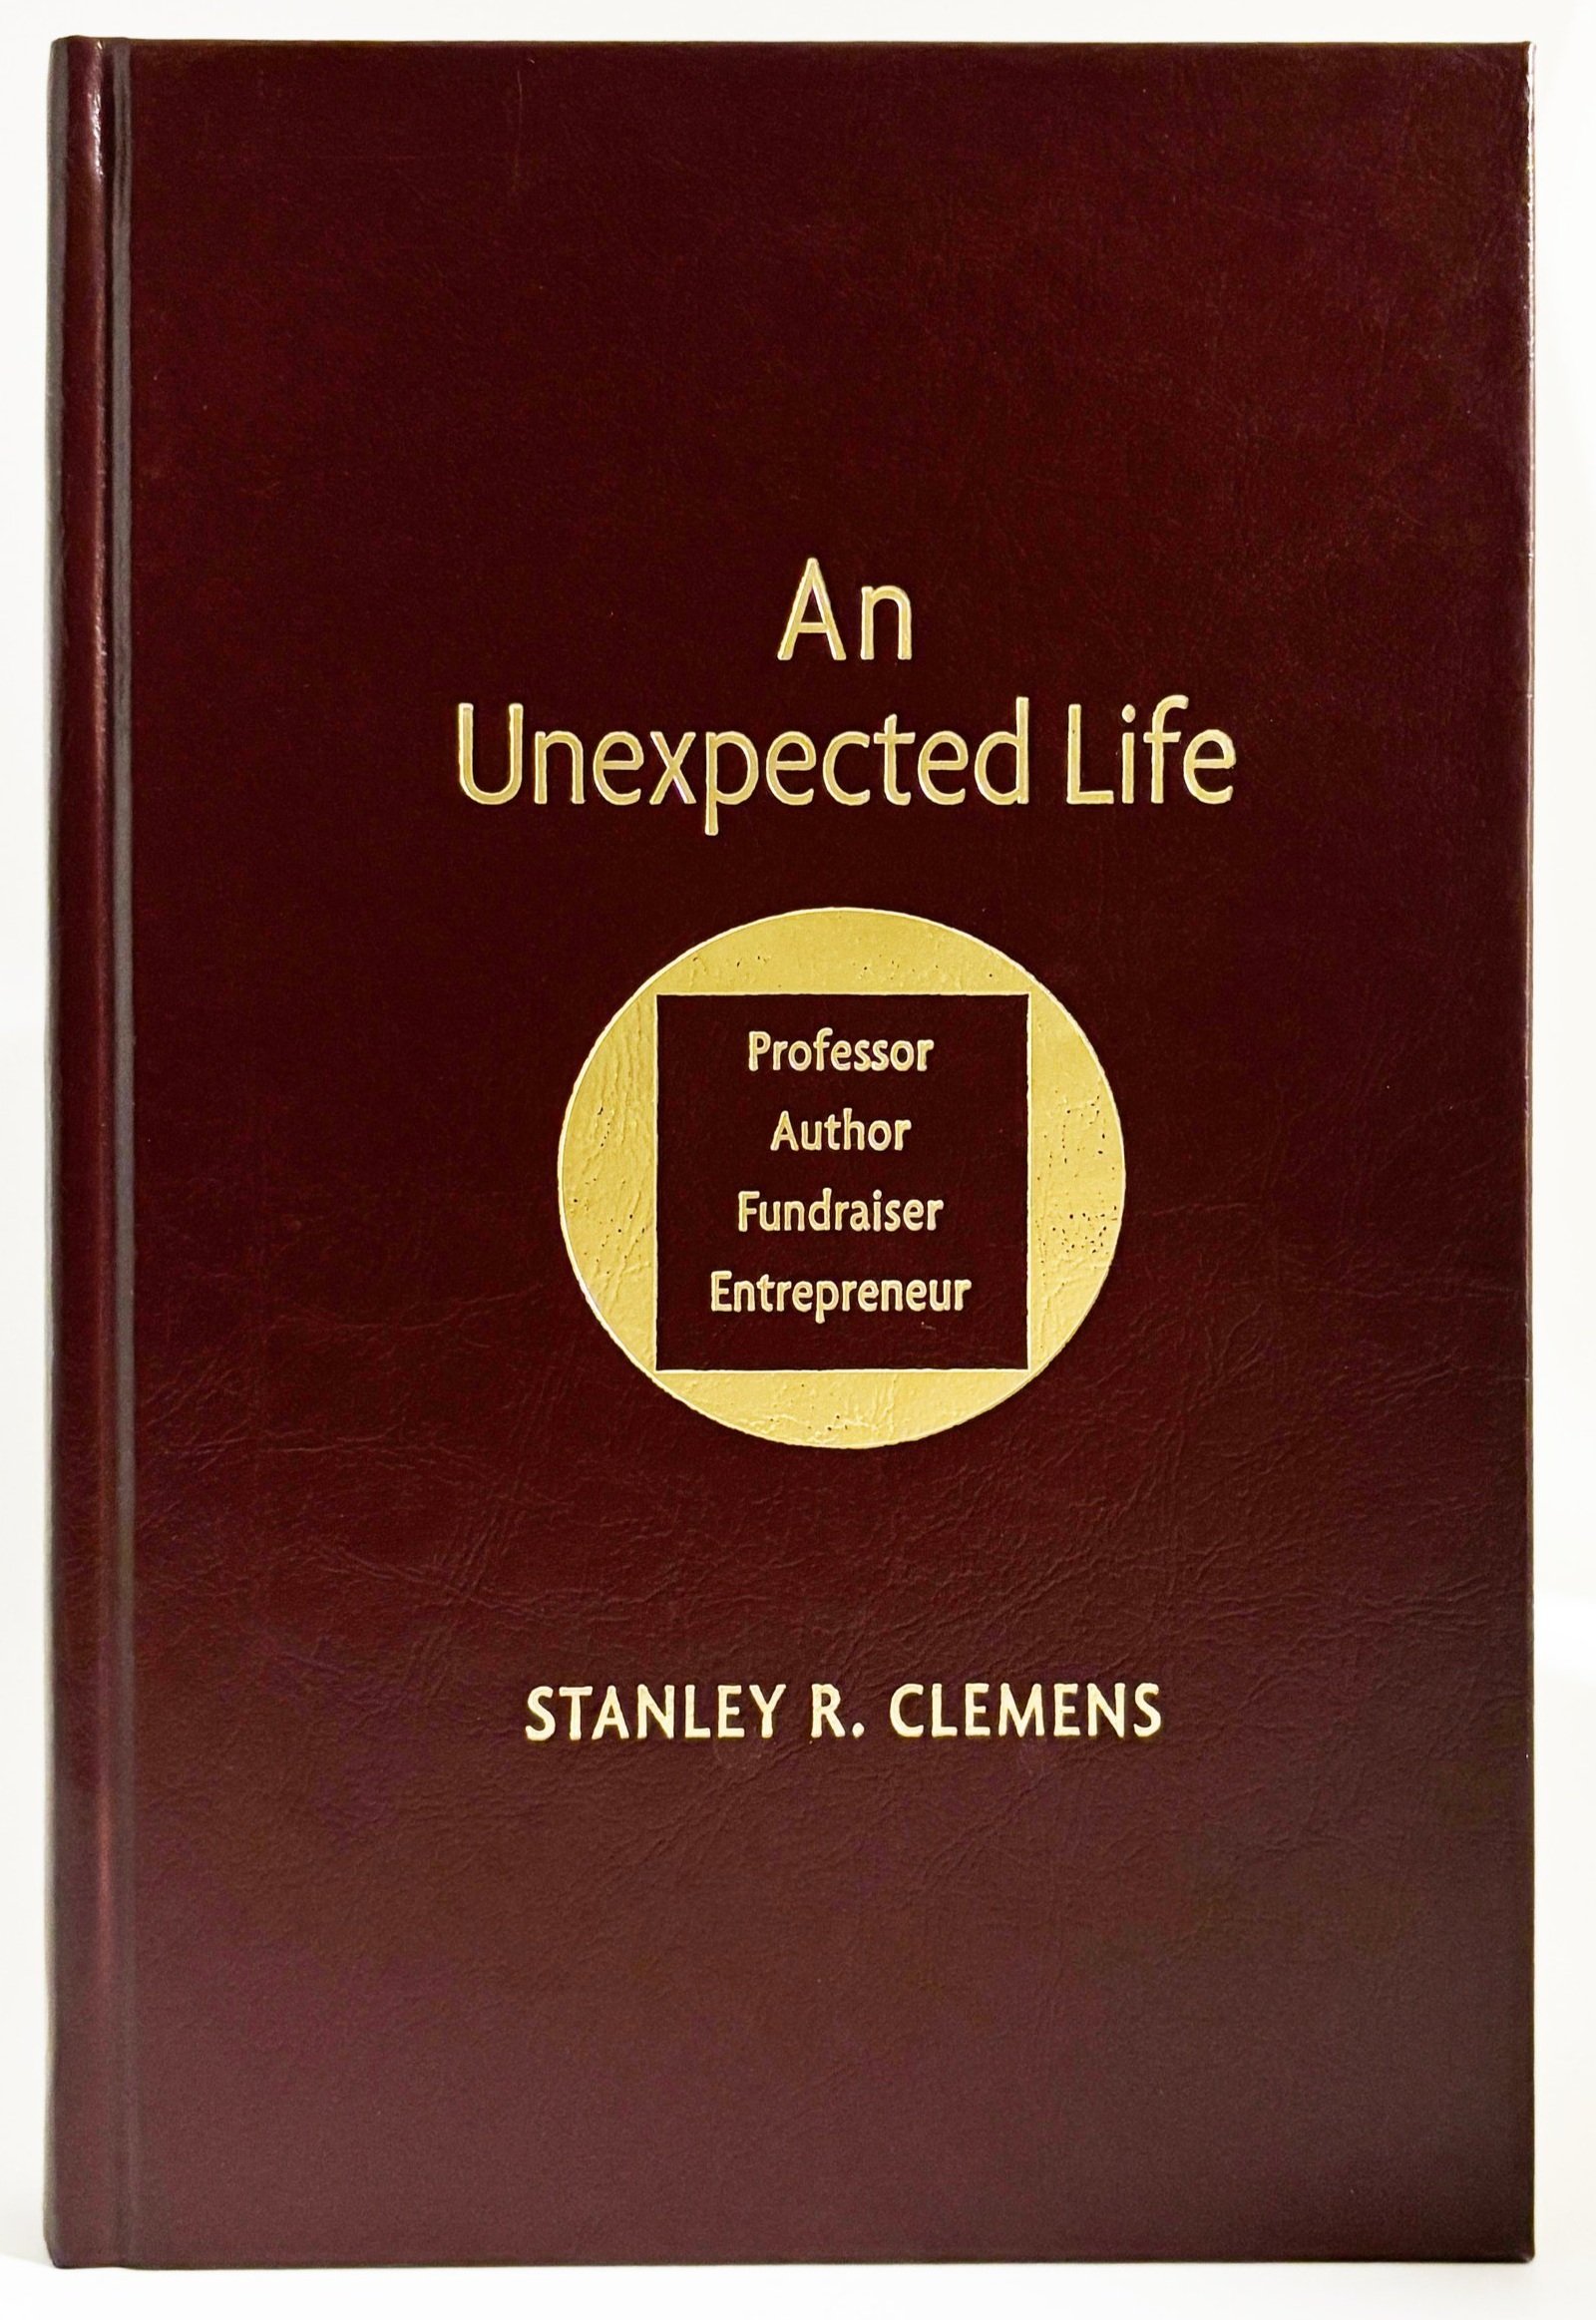 An Unexpected Life: Professor, Author, Fundraiser, Entrepreneur (2010)